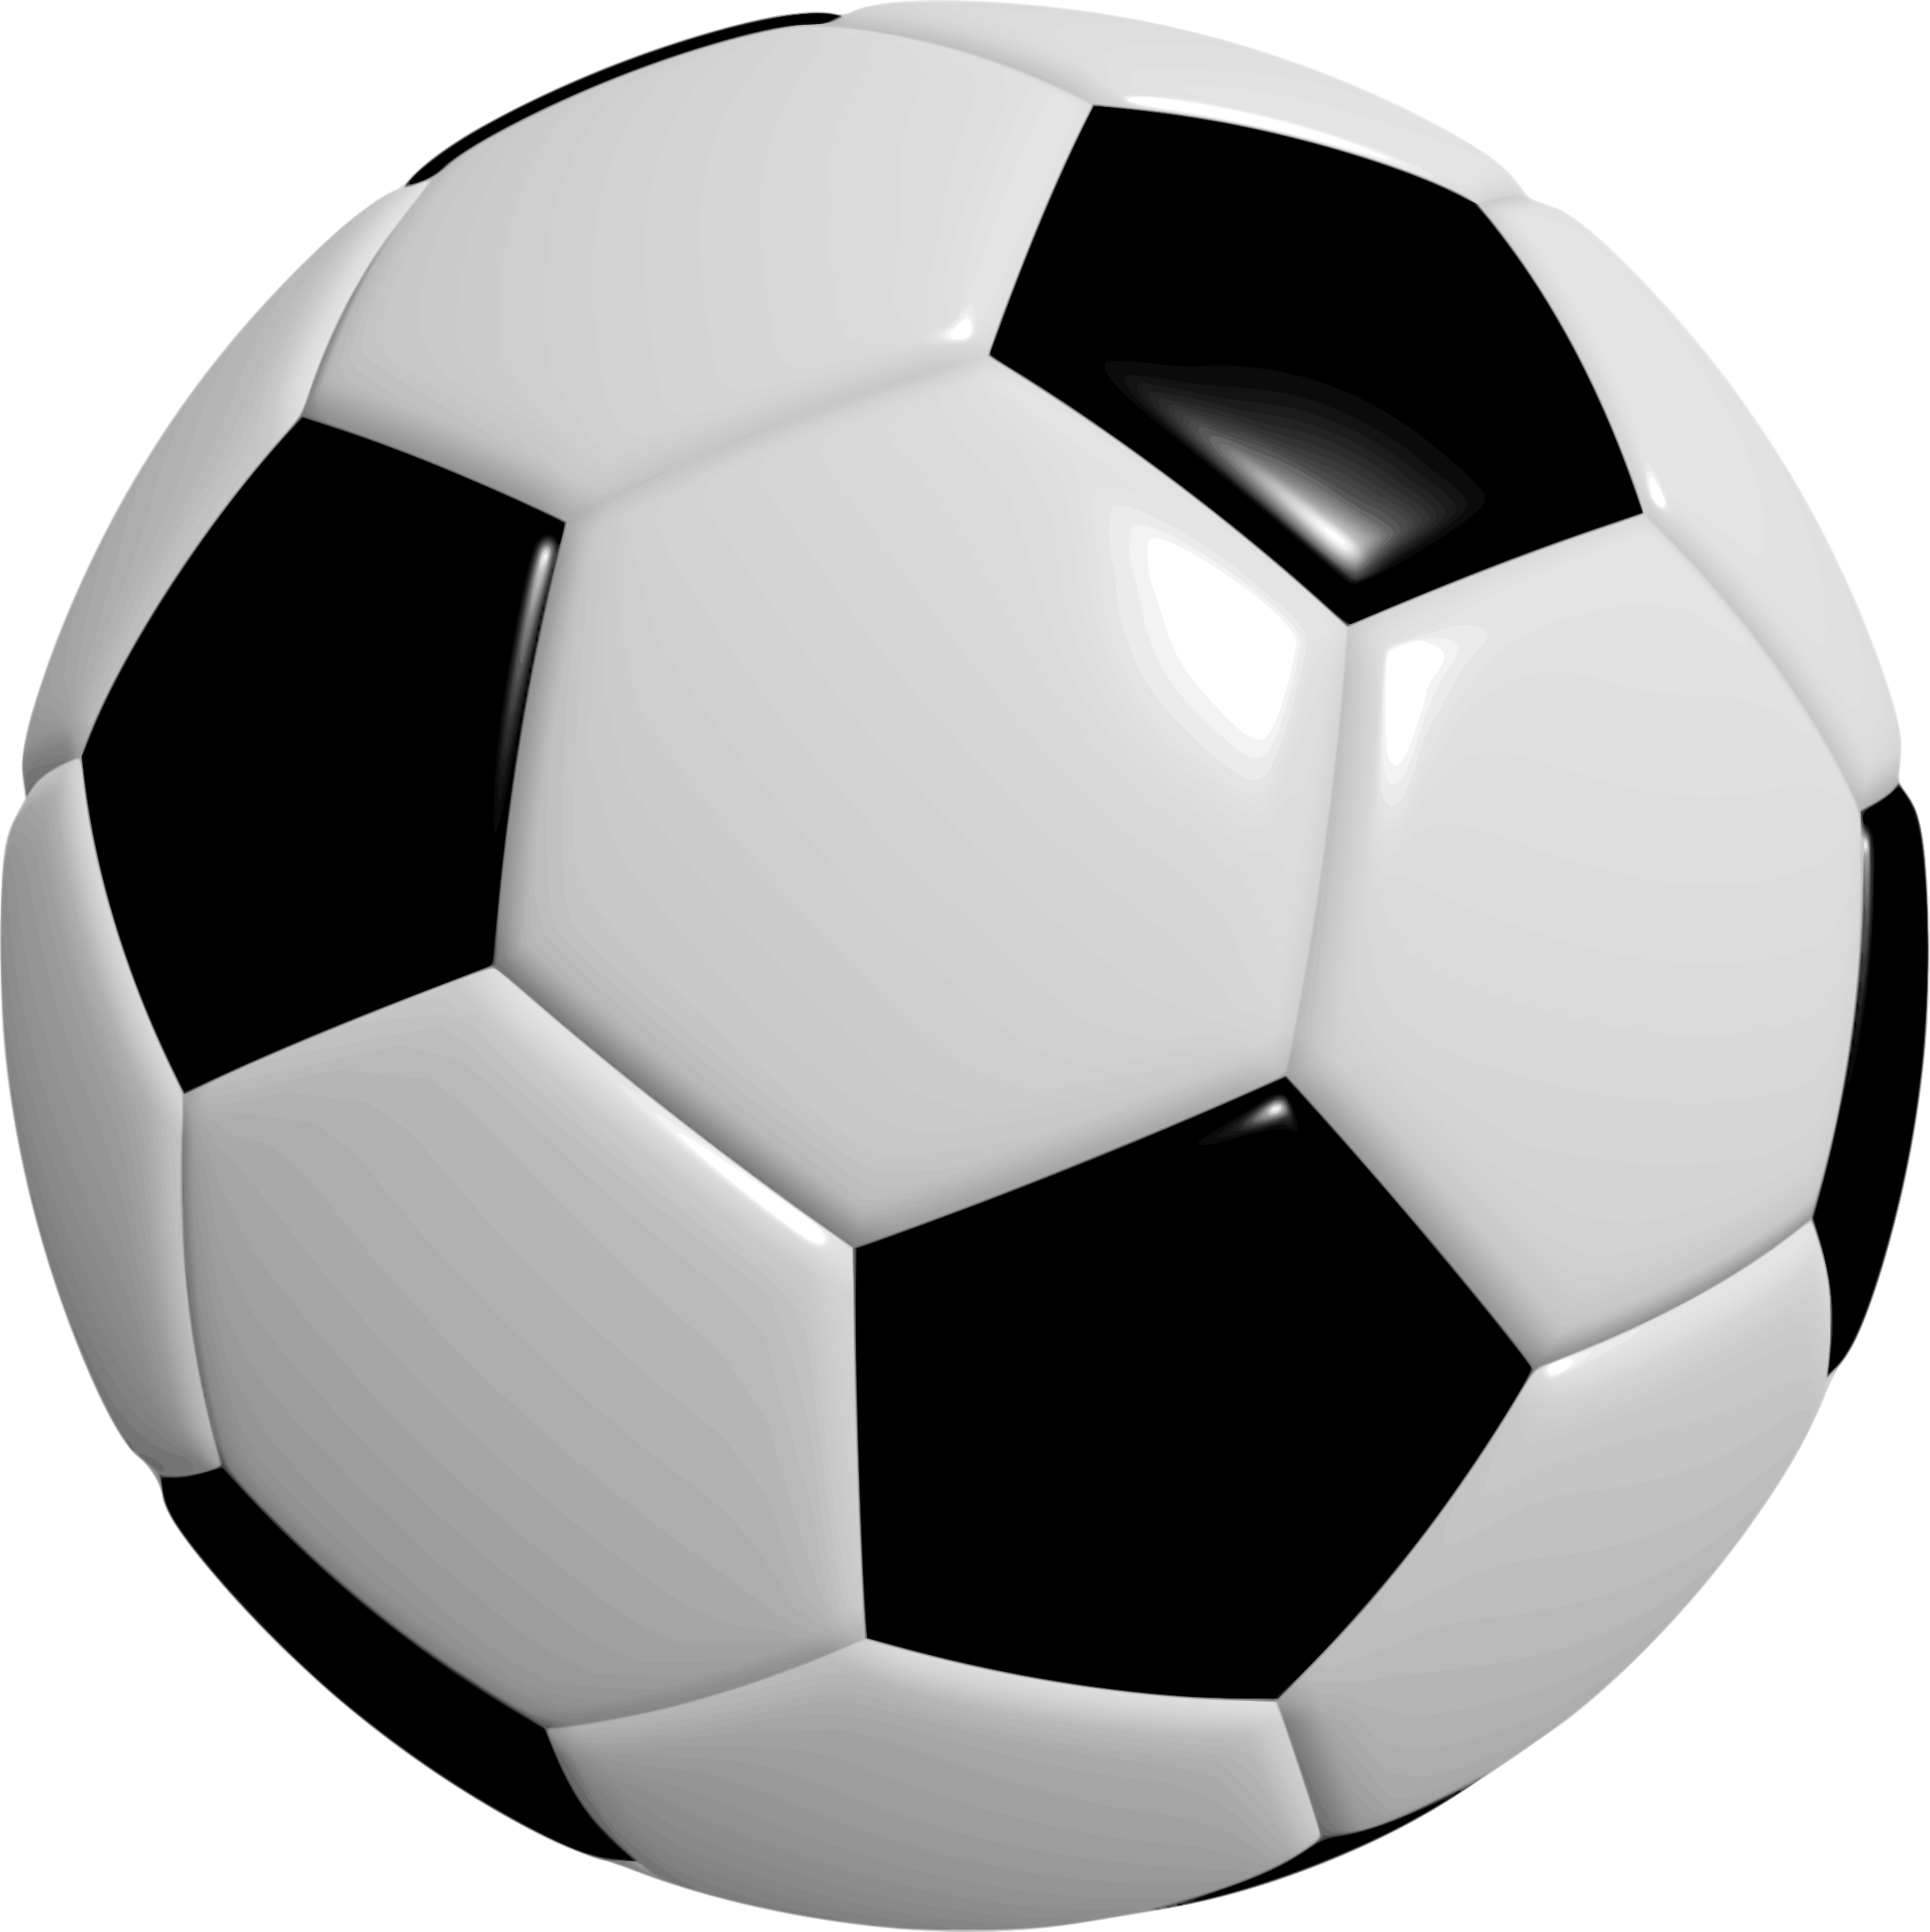 Balón de fútbol PNG imagen de alta calidad